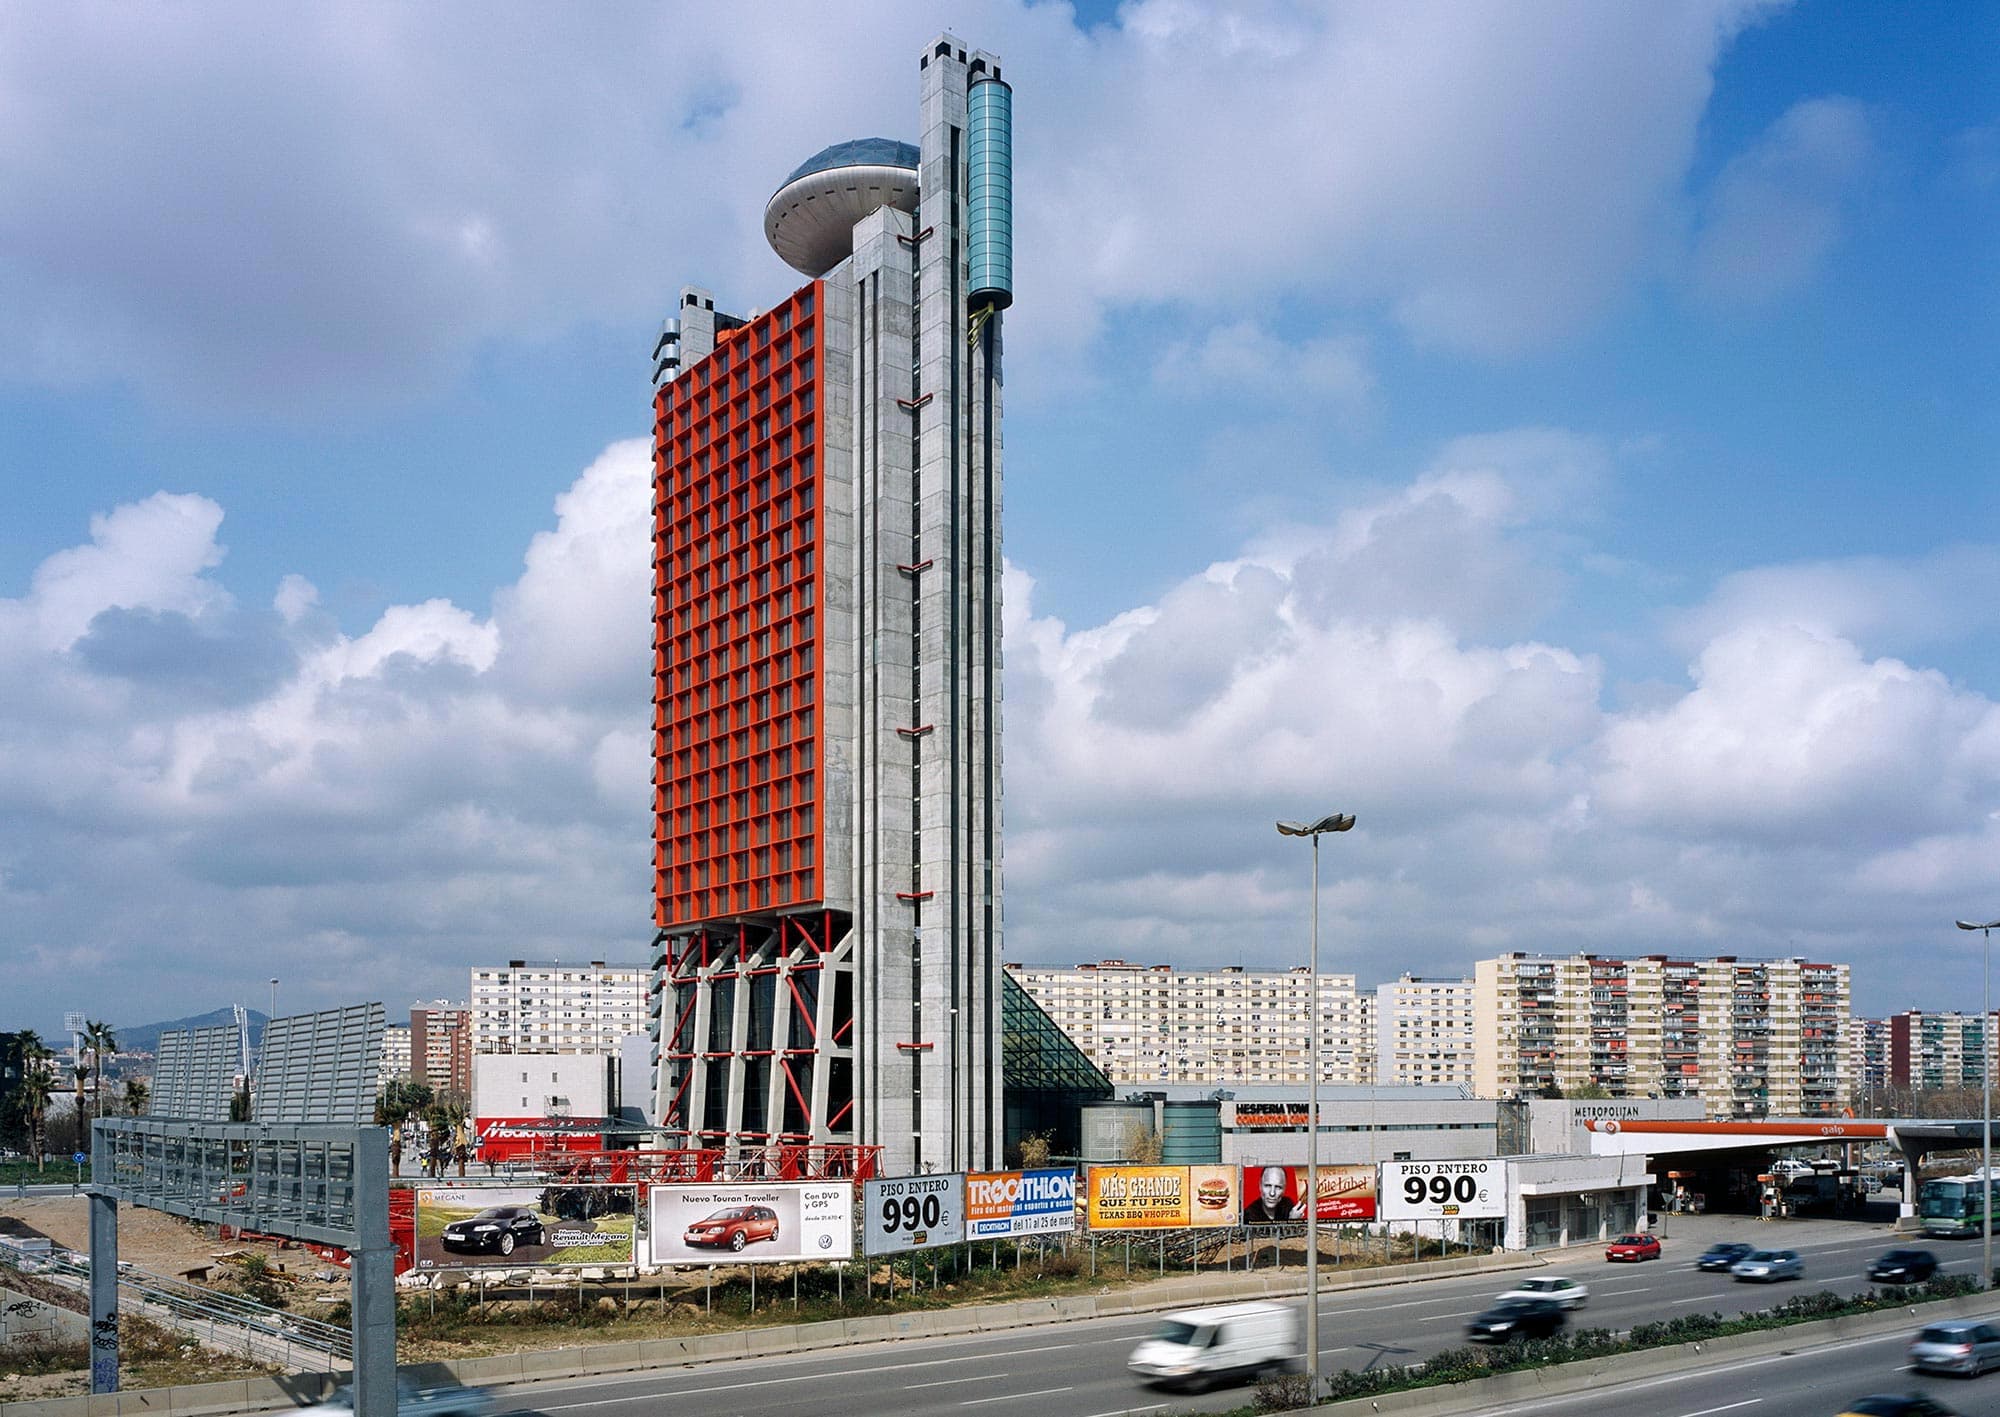 Hotel Hesperia Tower